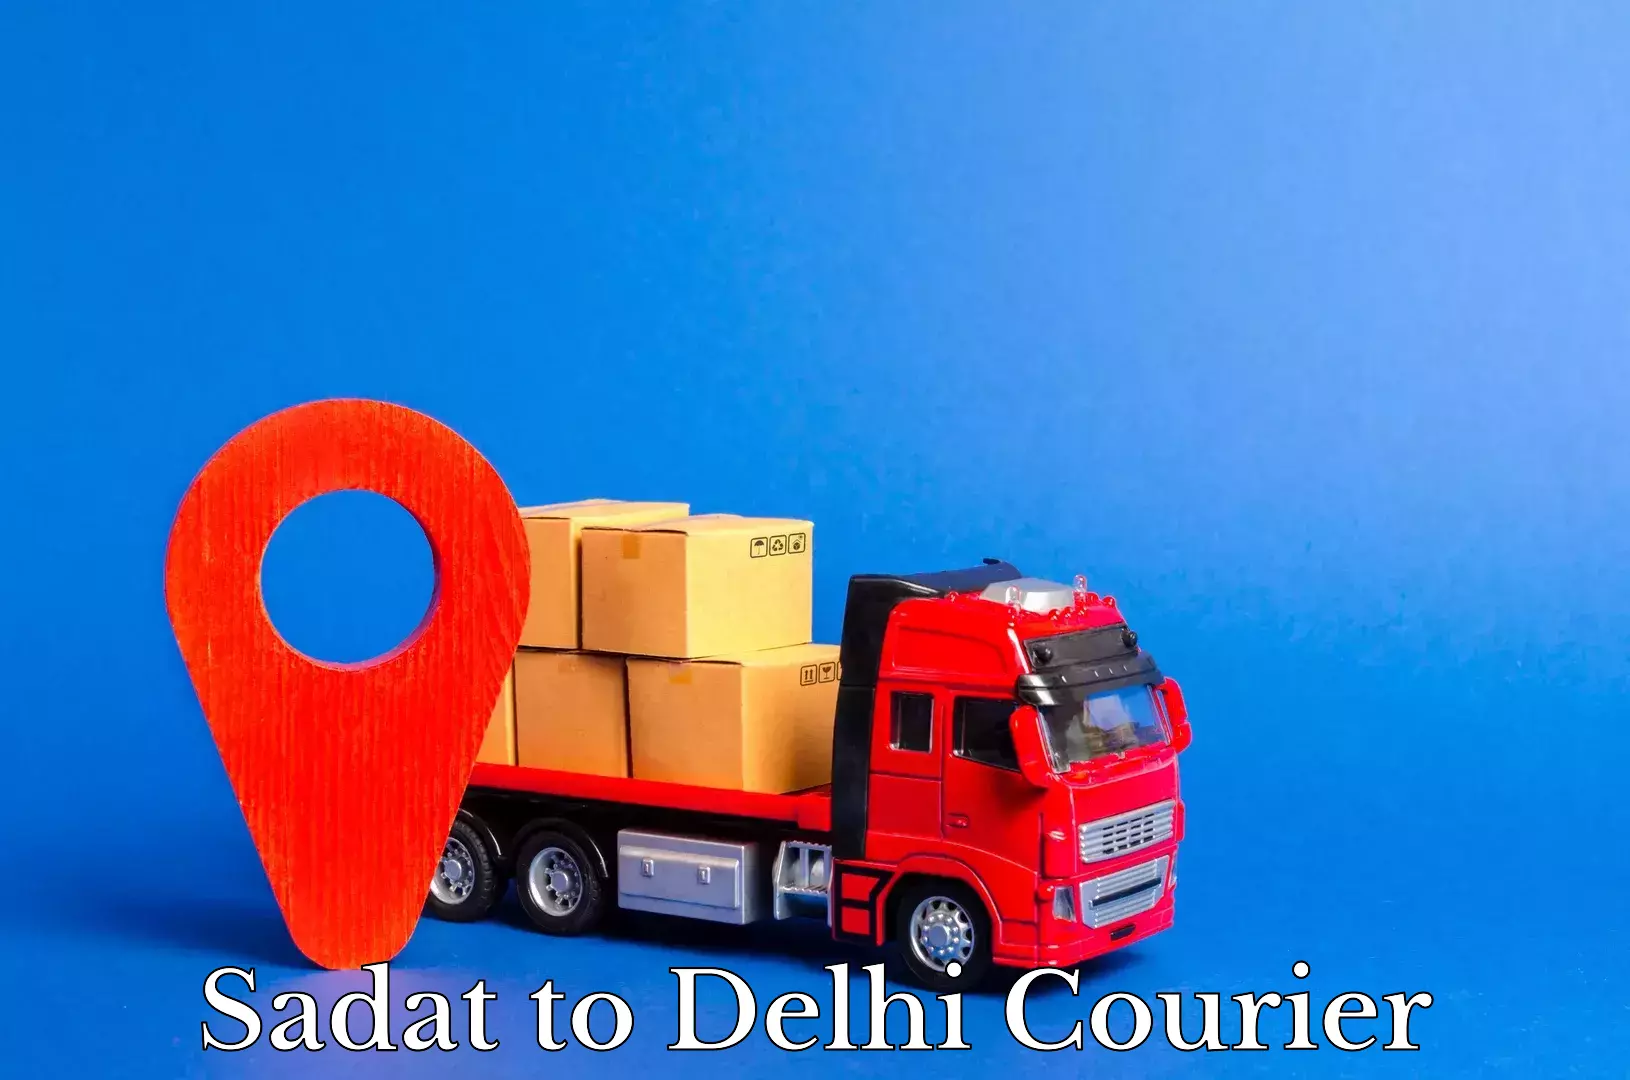 Delivery service partnership Sadat to Delhi